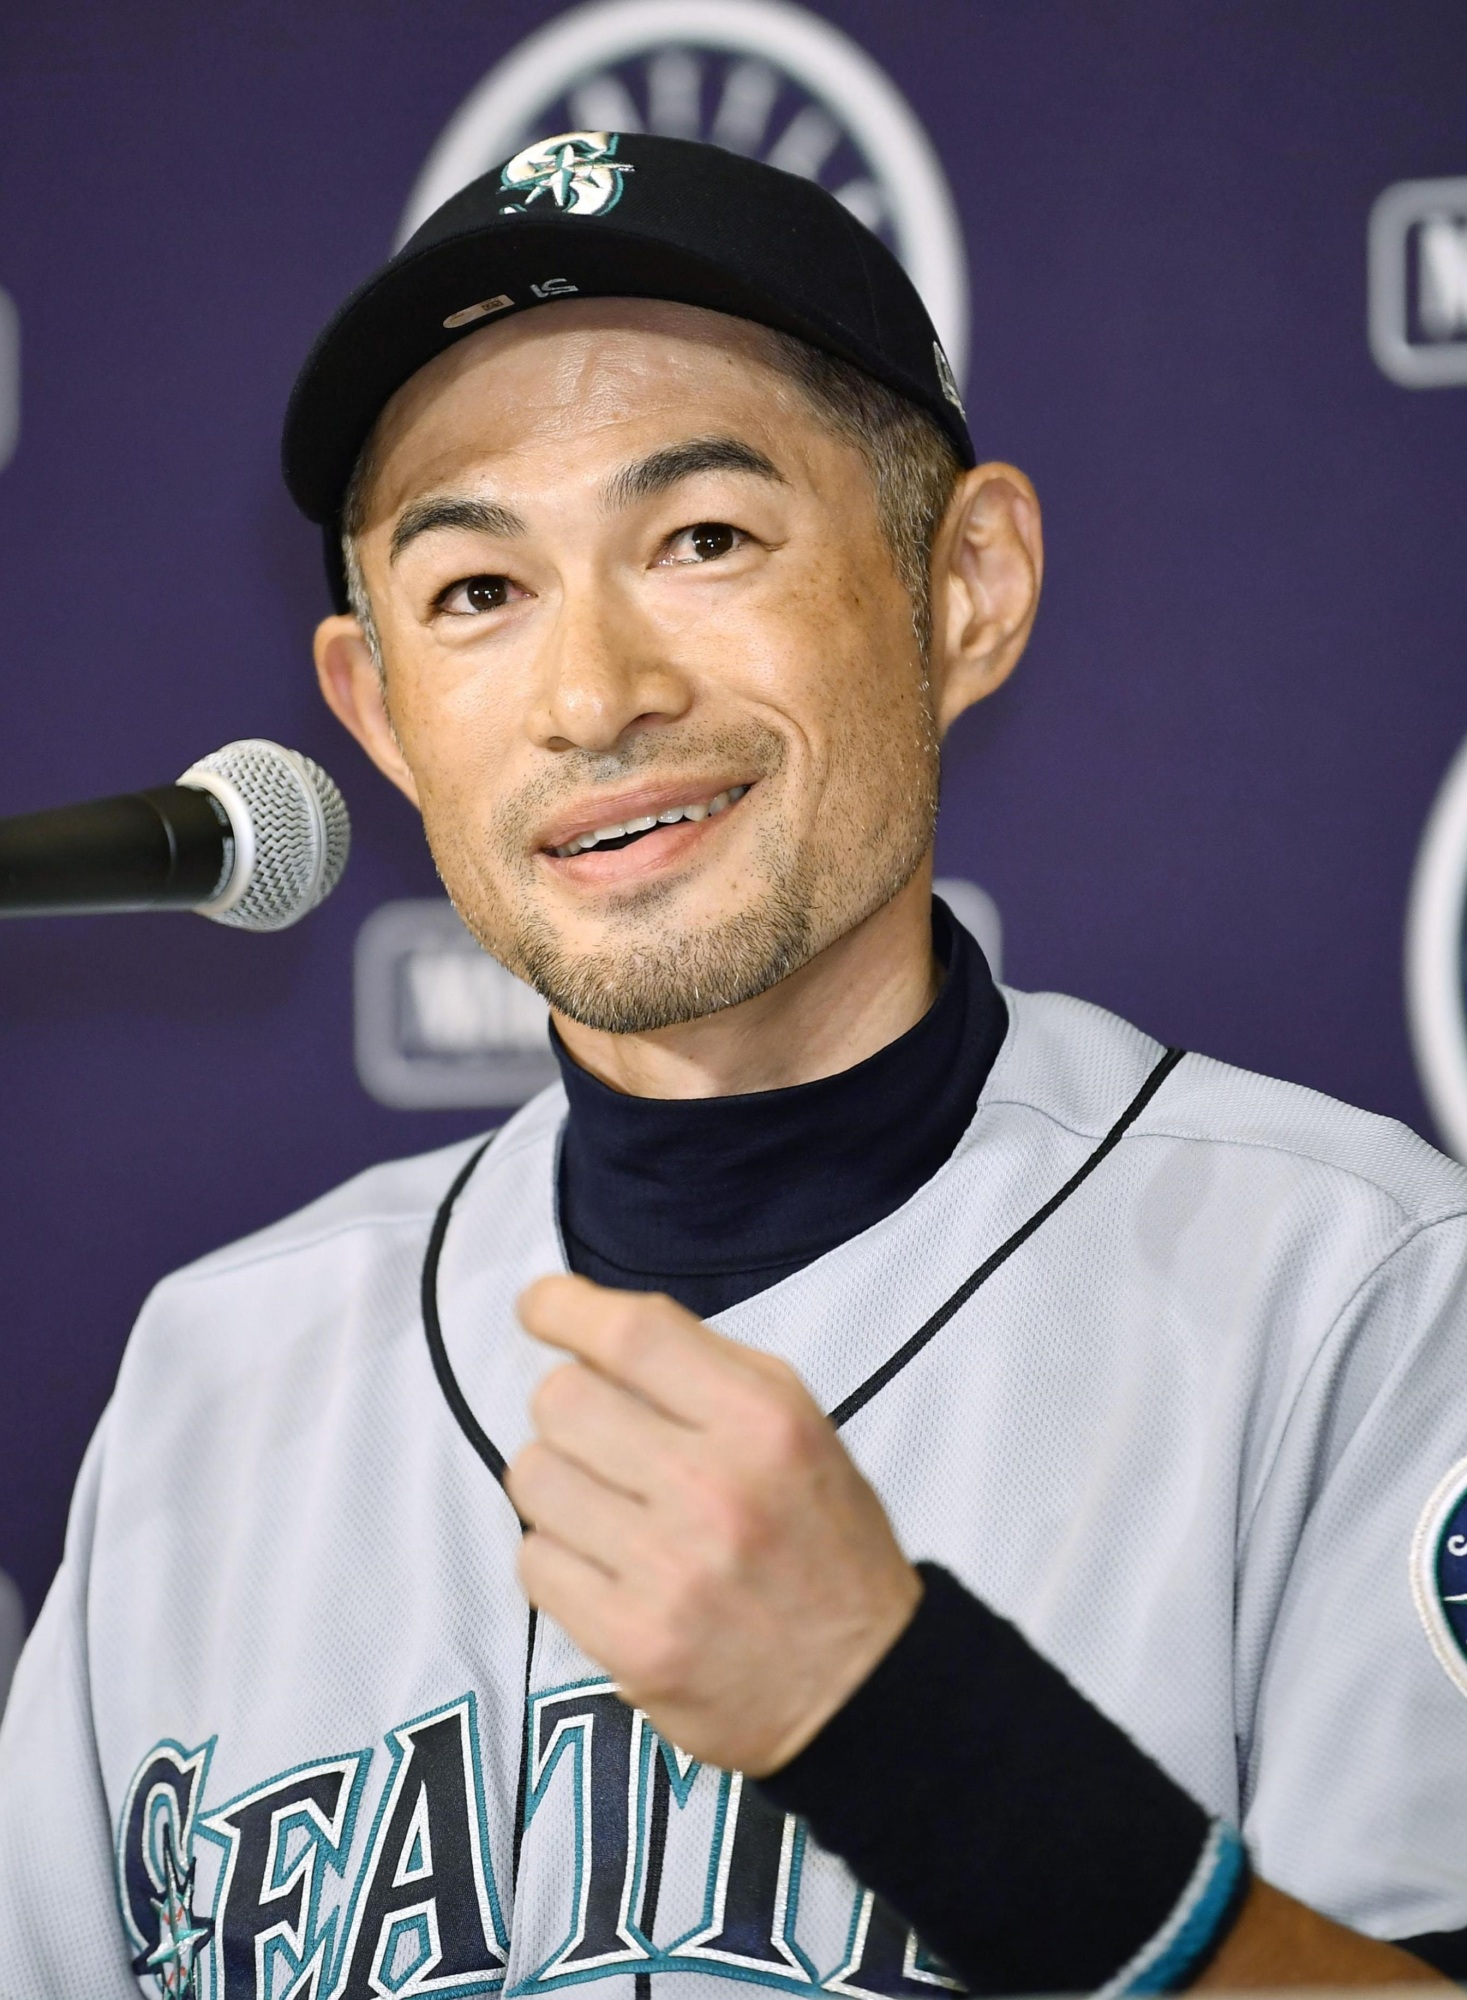 Ichiro Suzuki: 1 To 51. 51 Fun Facts & Stats on One of…, by Mariners PR